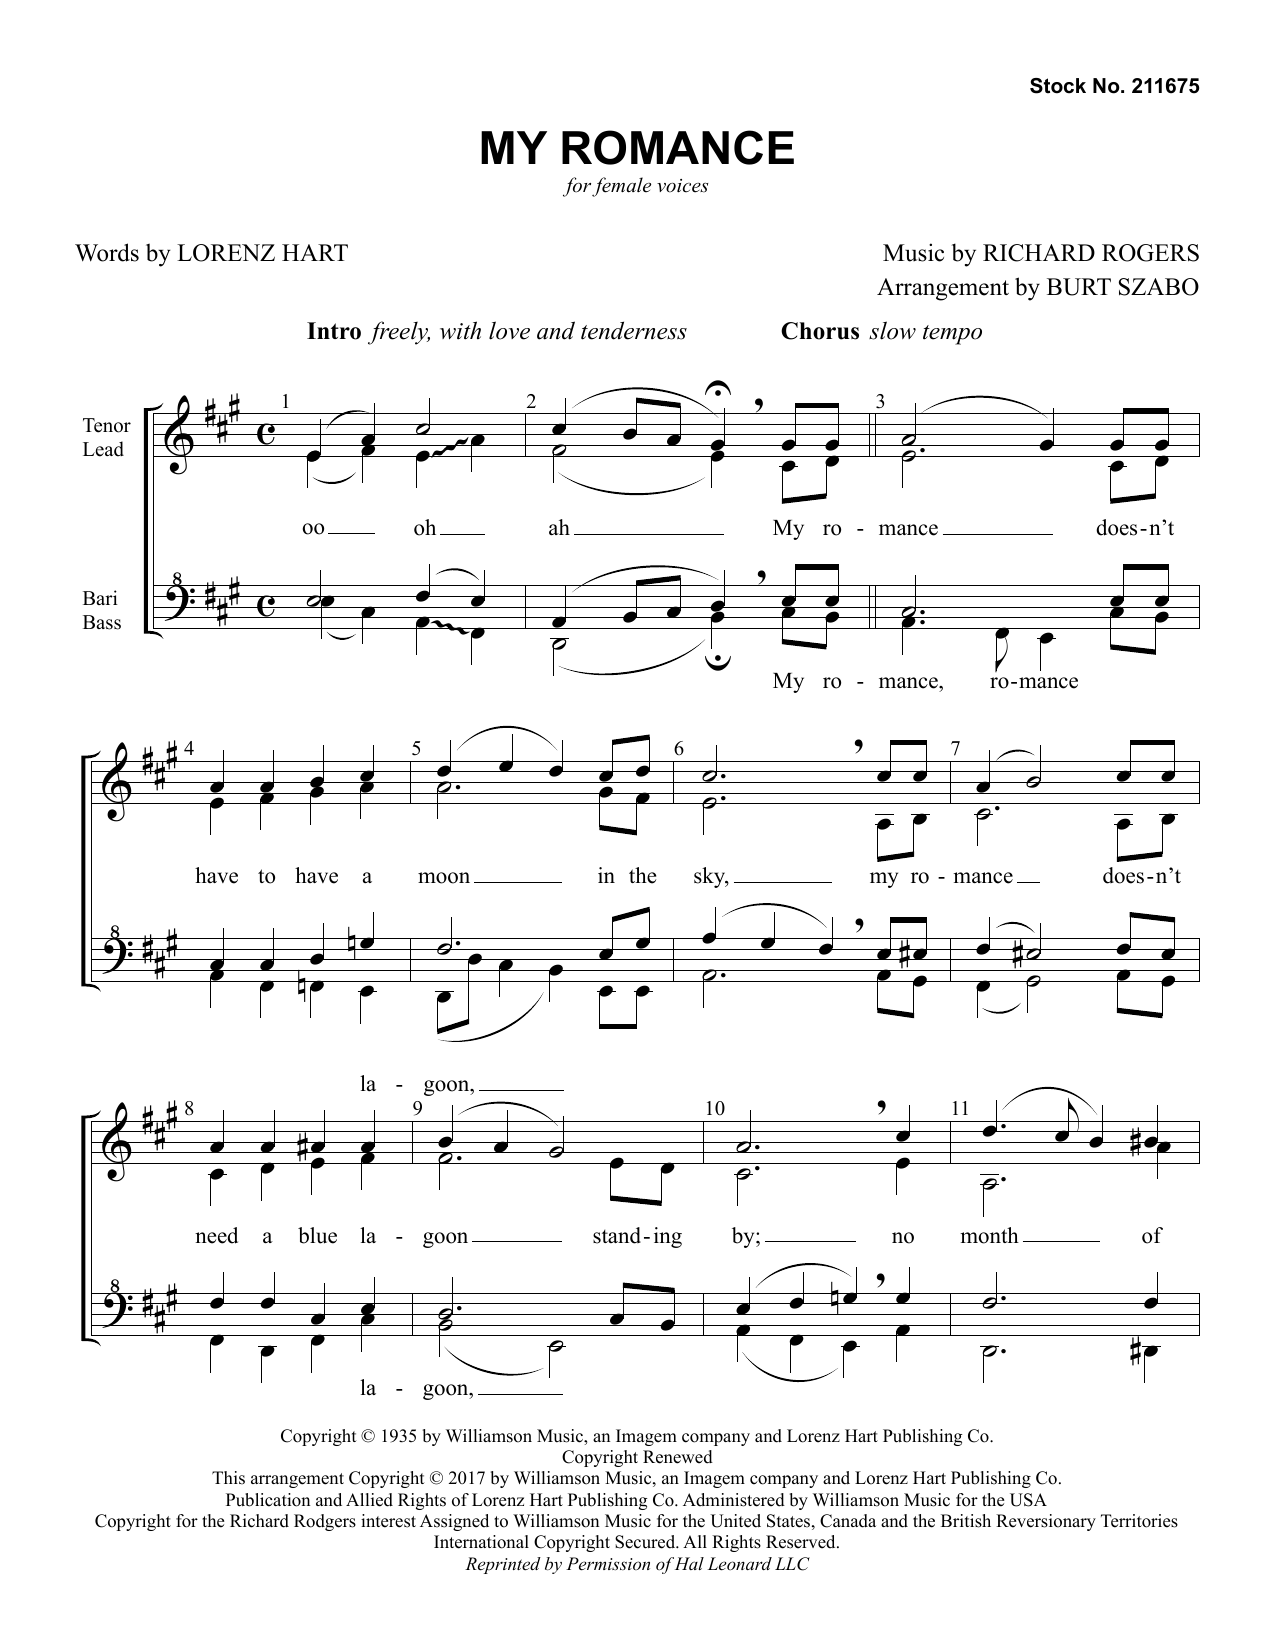 Rodgers & Hart My Romance (arr. Burt Szabo) Sheet Music Notes & Chords for SSA Choir - Download or Print PDF